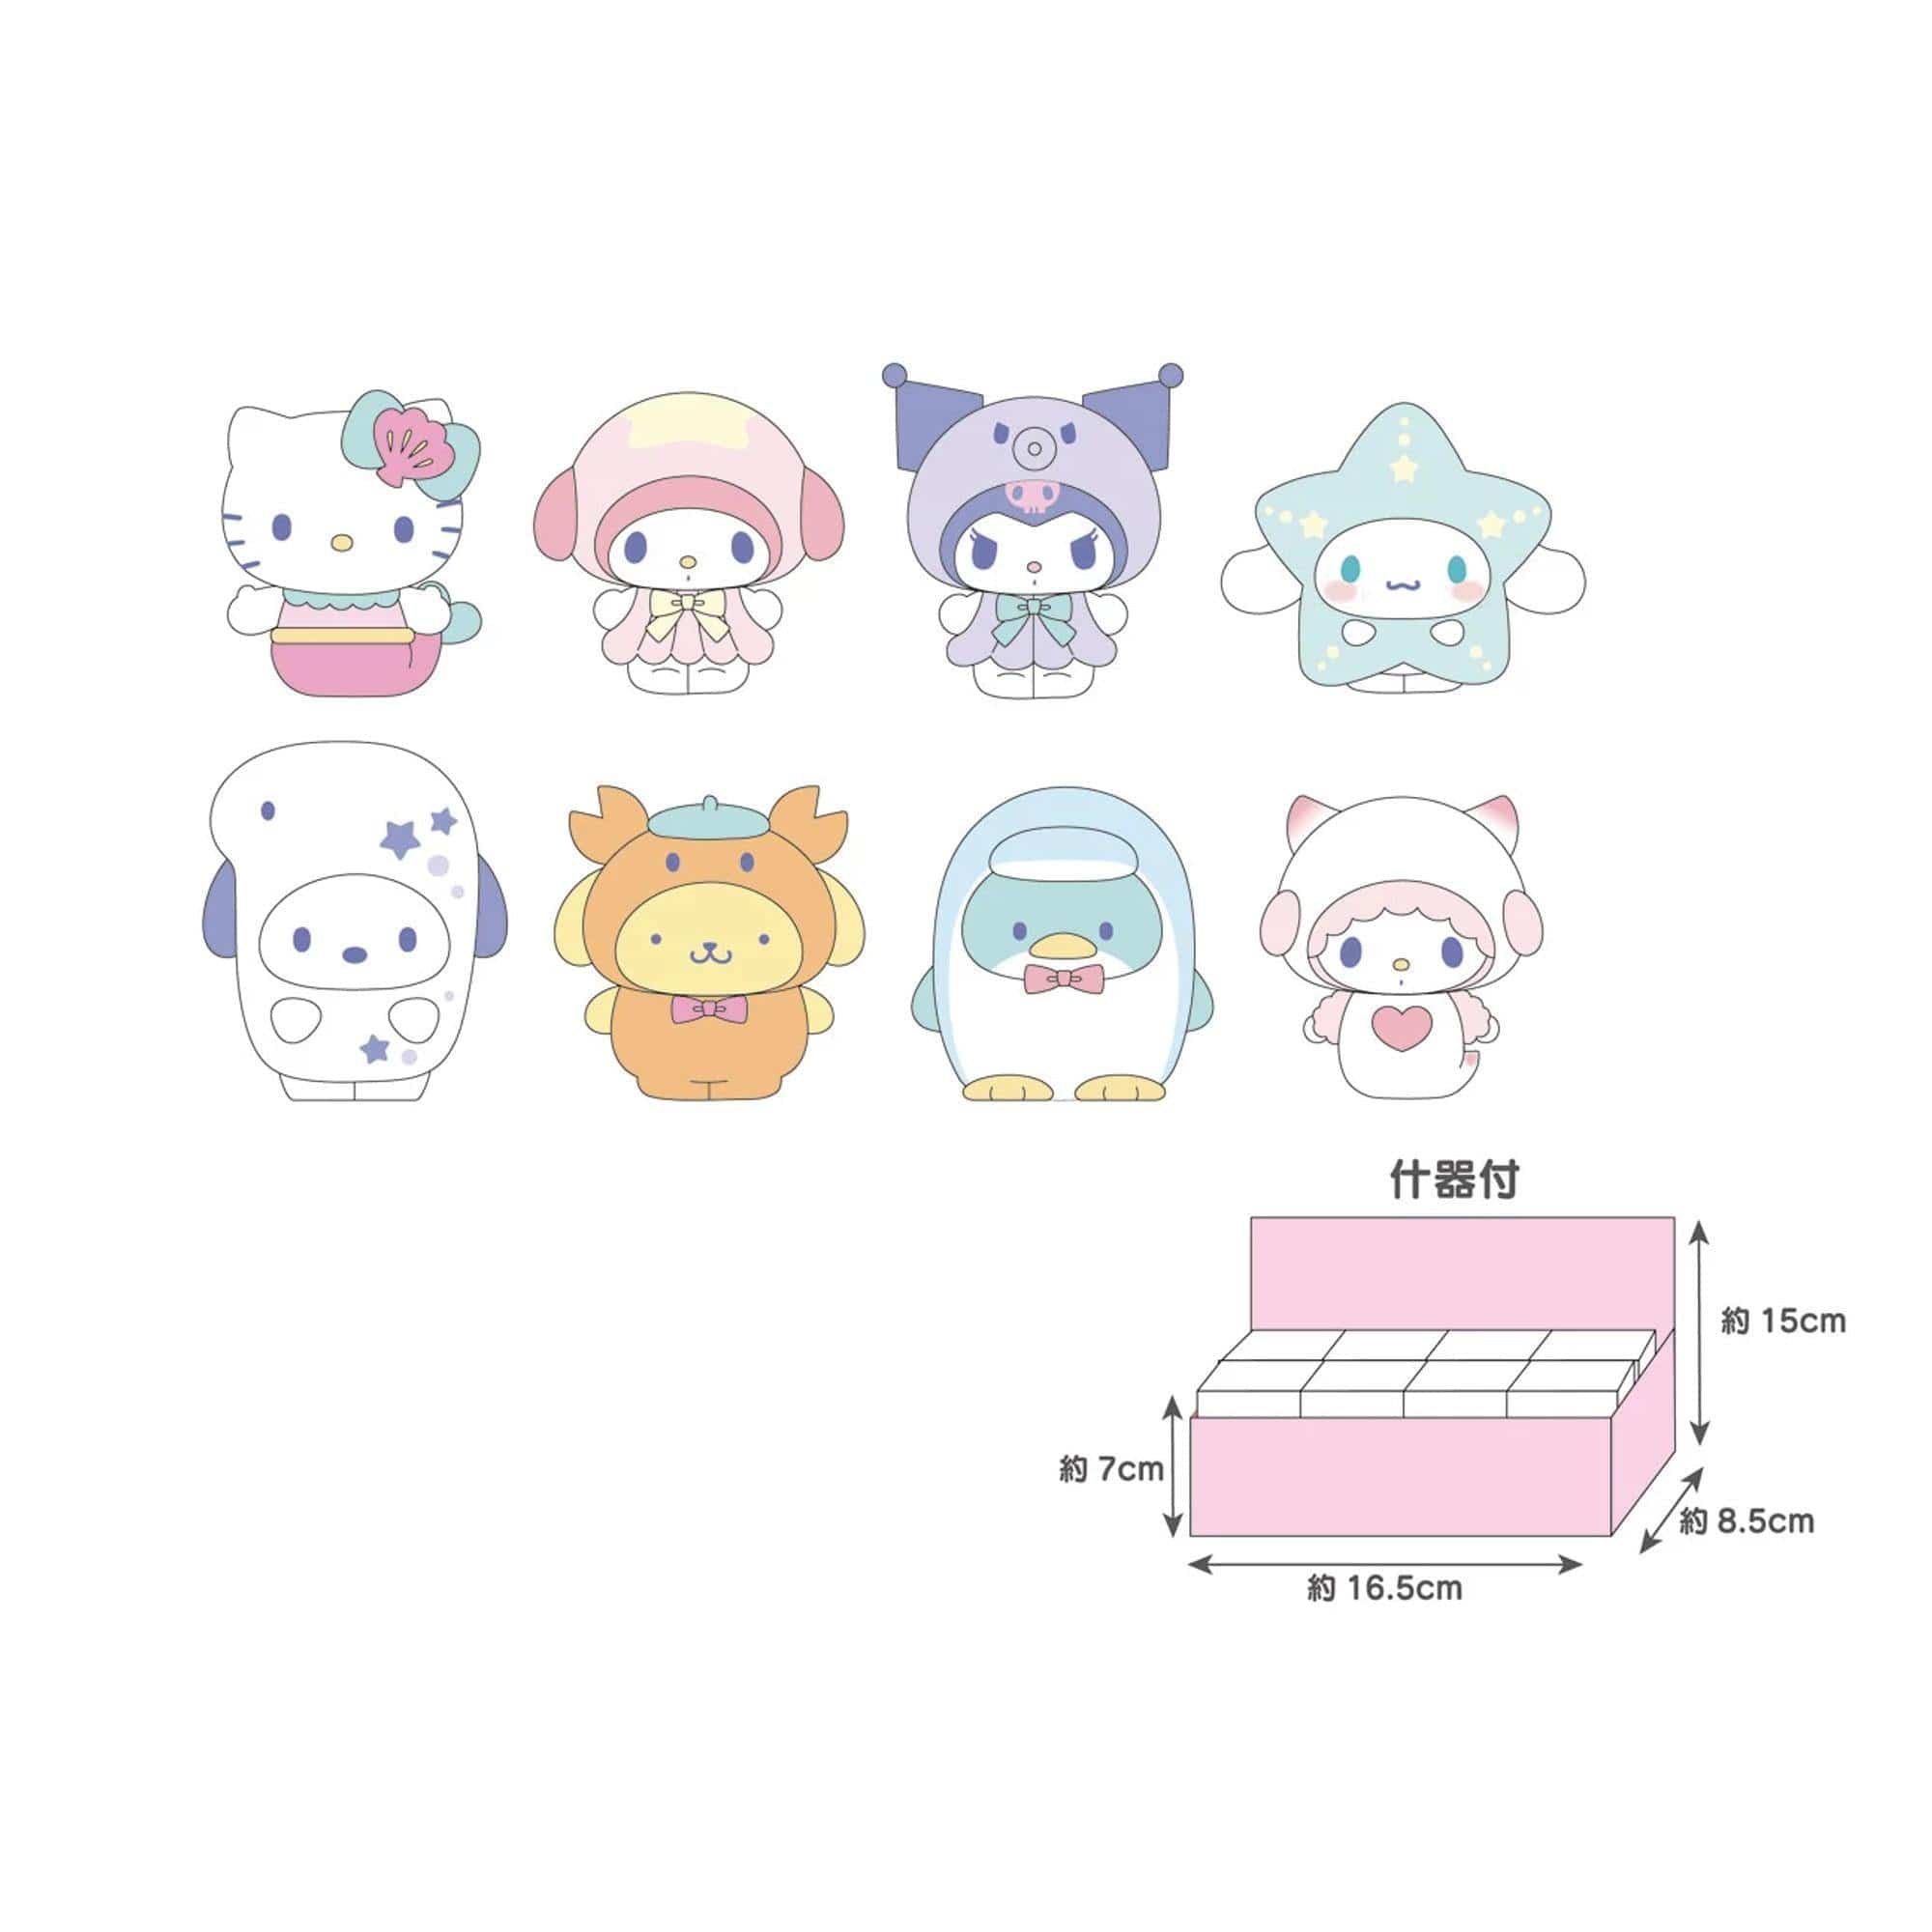 Enesco Sanrio Mermaids Mini Figure Surprise Box Kawaii Gifts 4550337181737